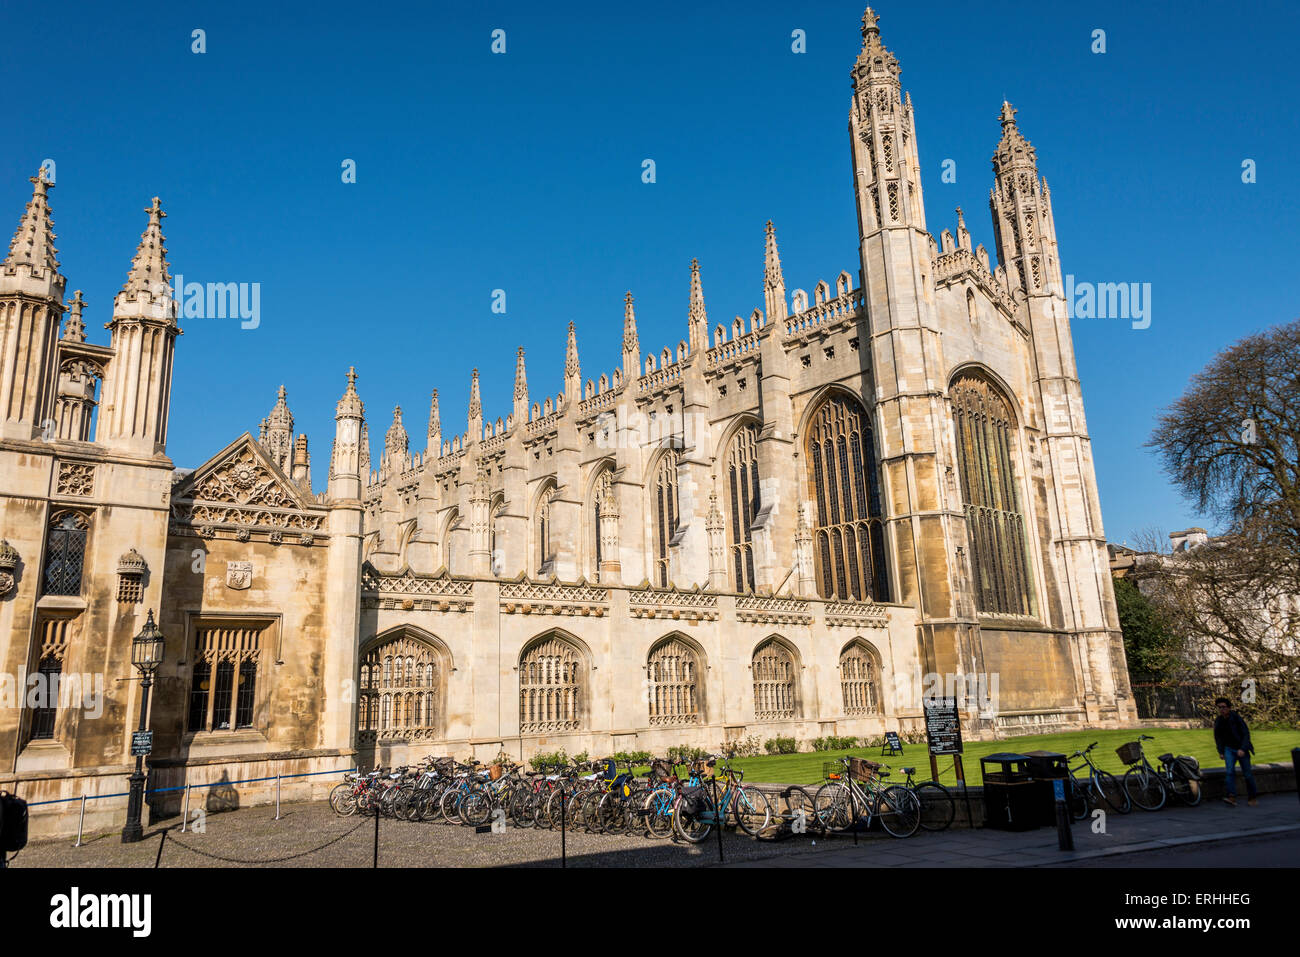 King's College of Cambridge University in the UK Stock Photo